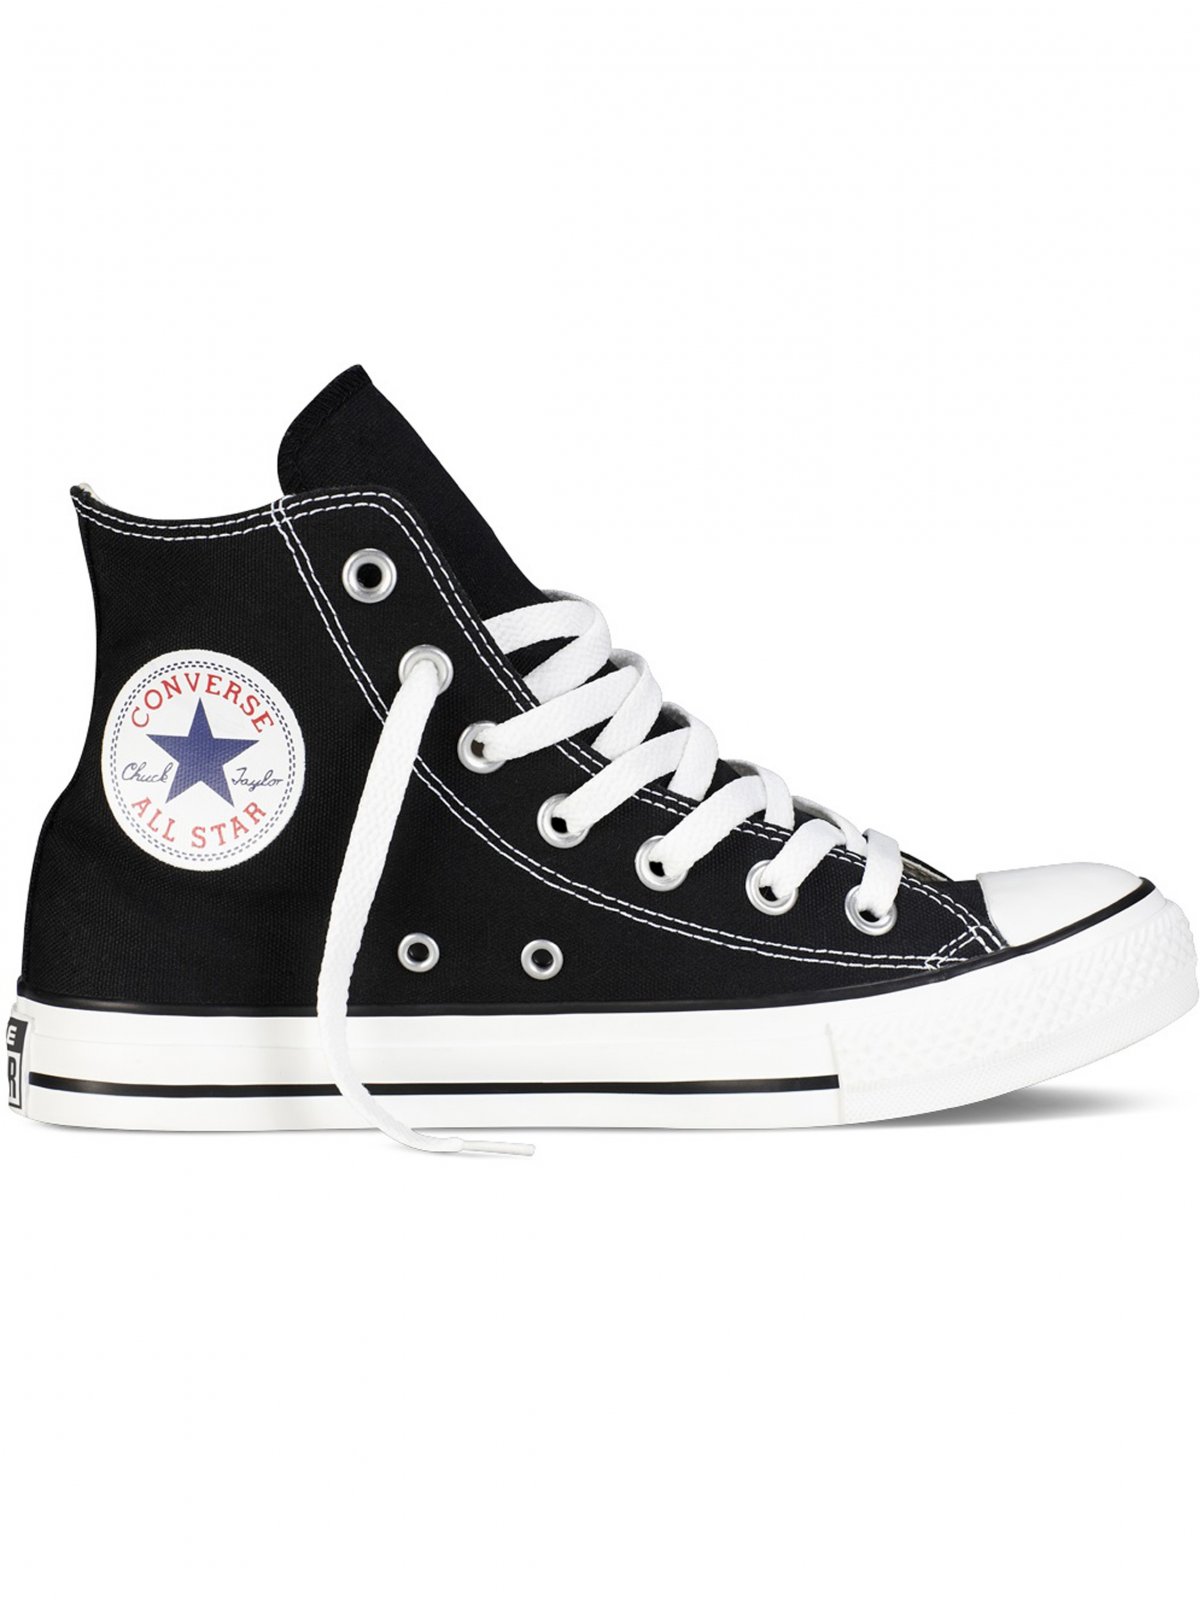 nødvendig kryds Sport Converse All Star Unisex Chuck Taylor High Top Sneakers - Black/White